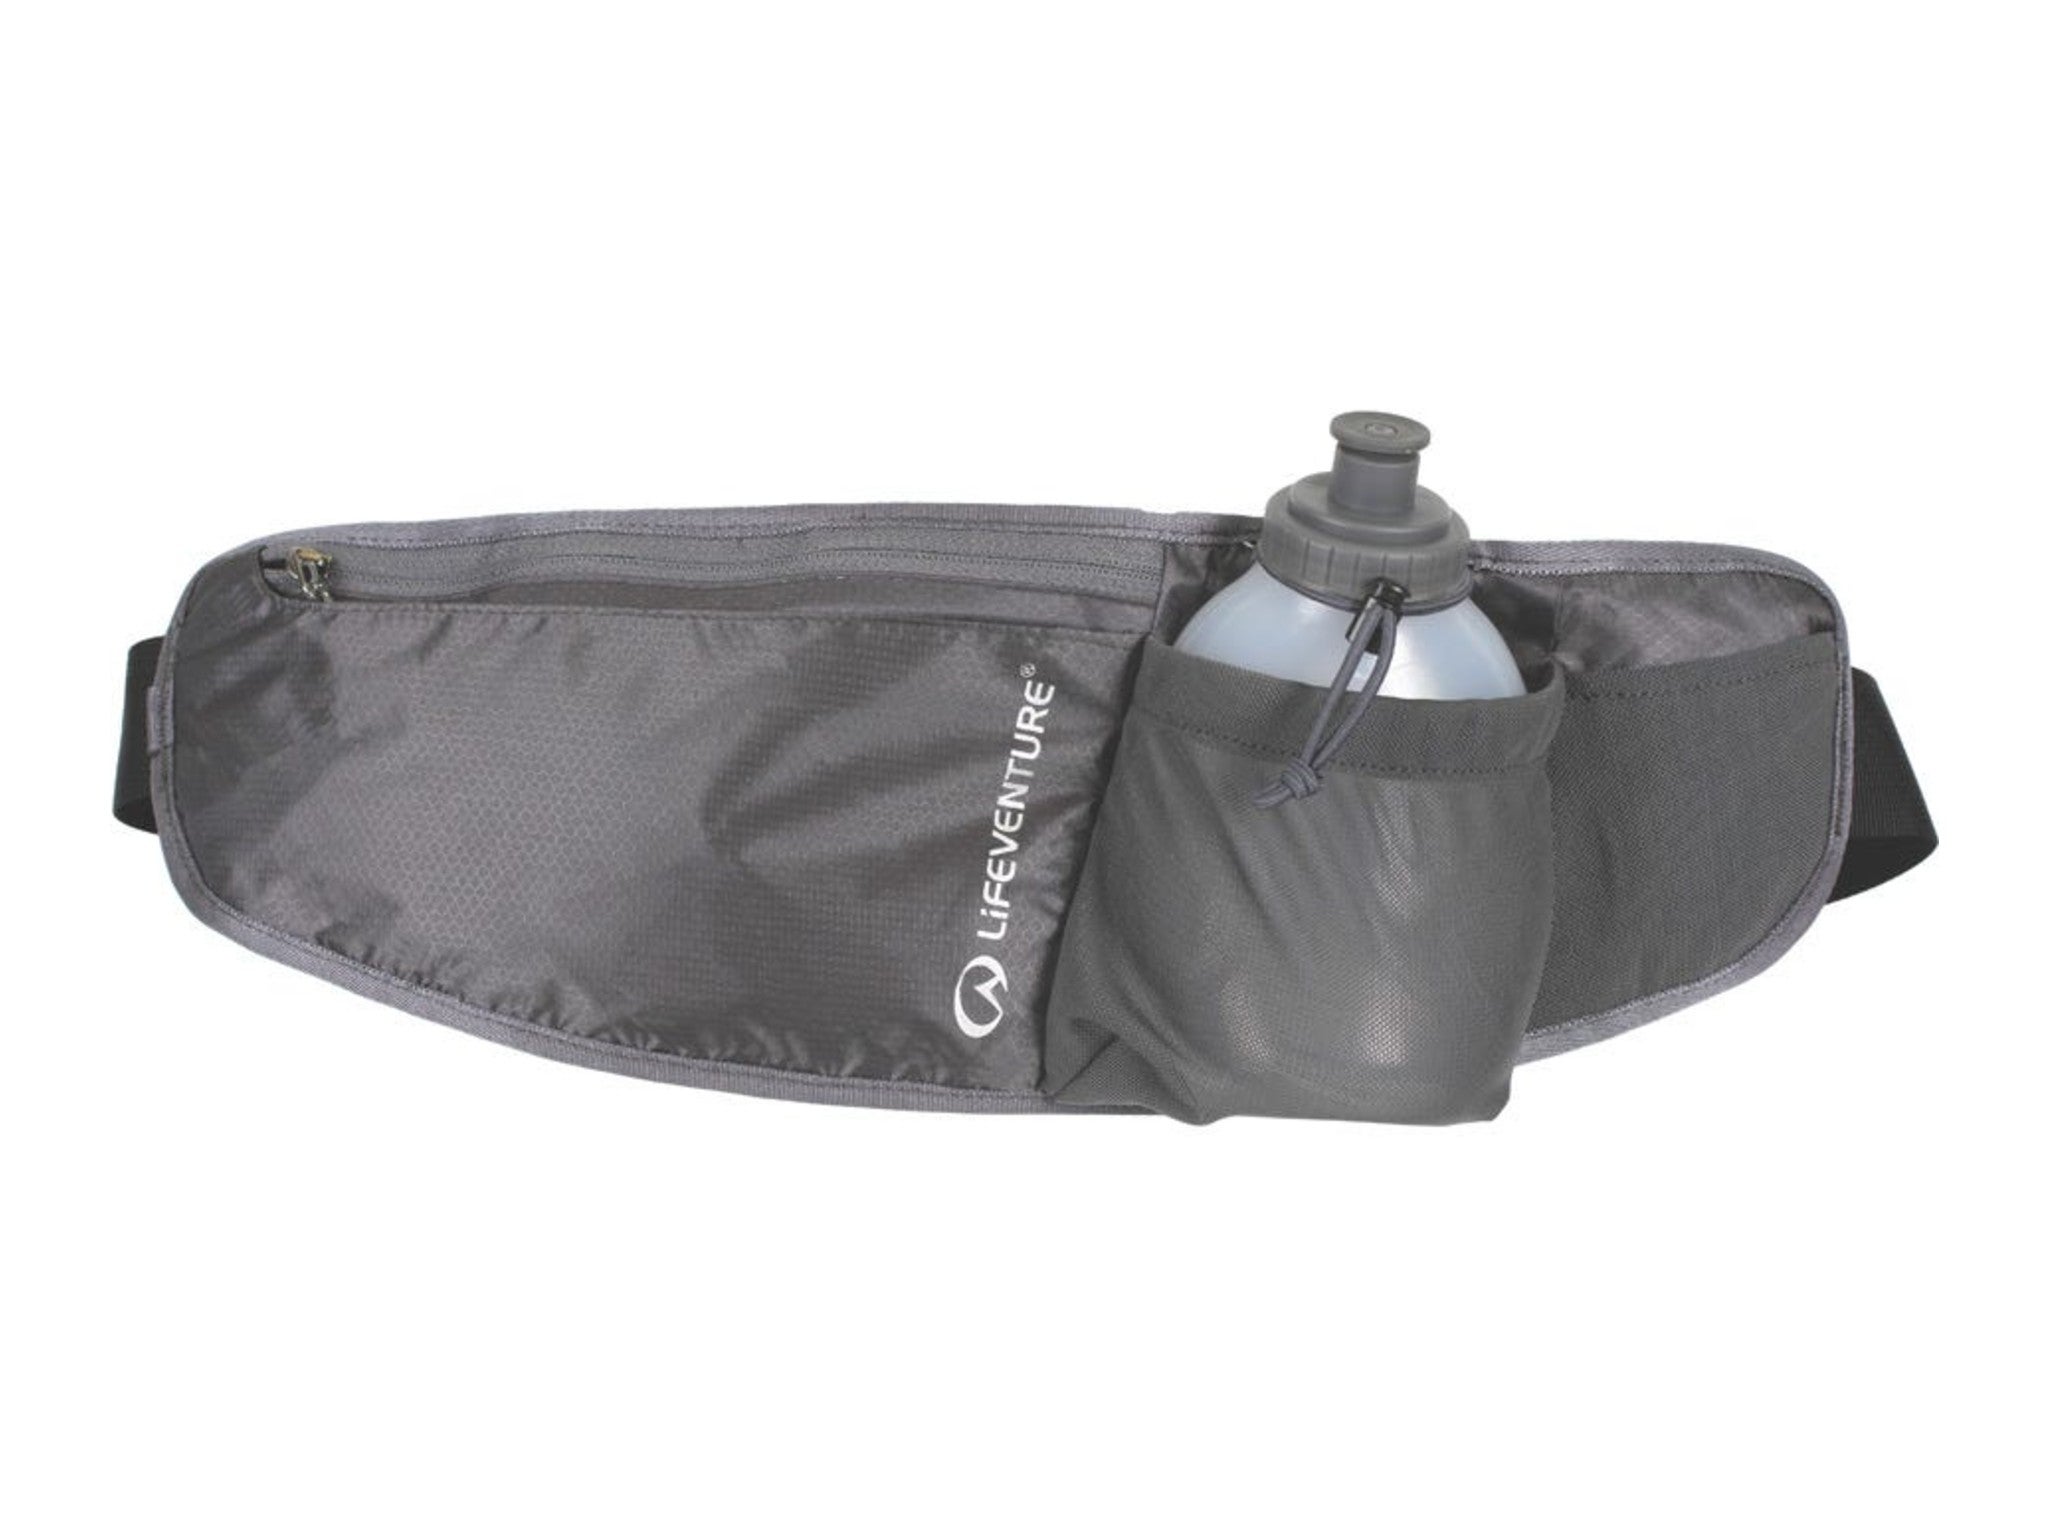 Littleadd Running Belt Hydration Waist Pack with Water Bottle Holder for Men Women Waist Pouch Fanny Bag Reflective Fits 6 Inch or Less Smartphone